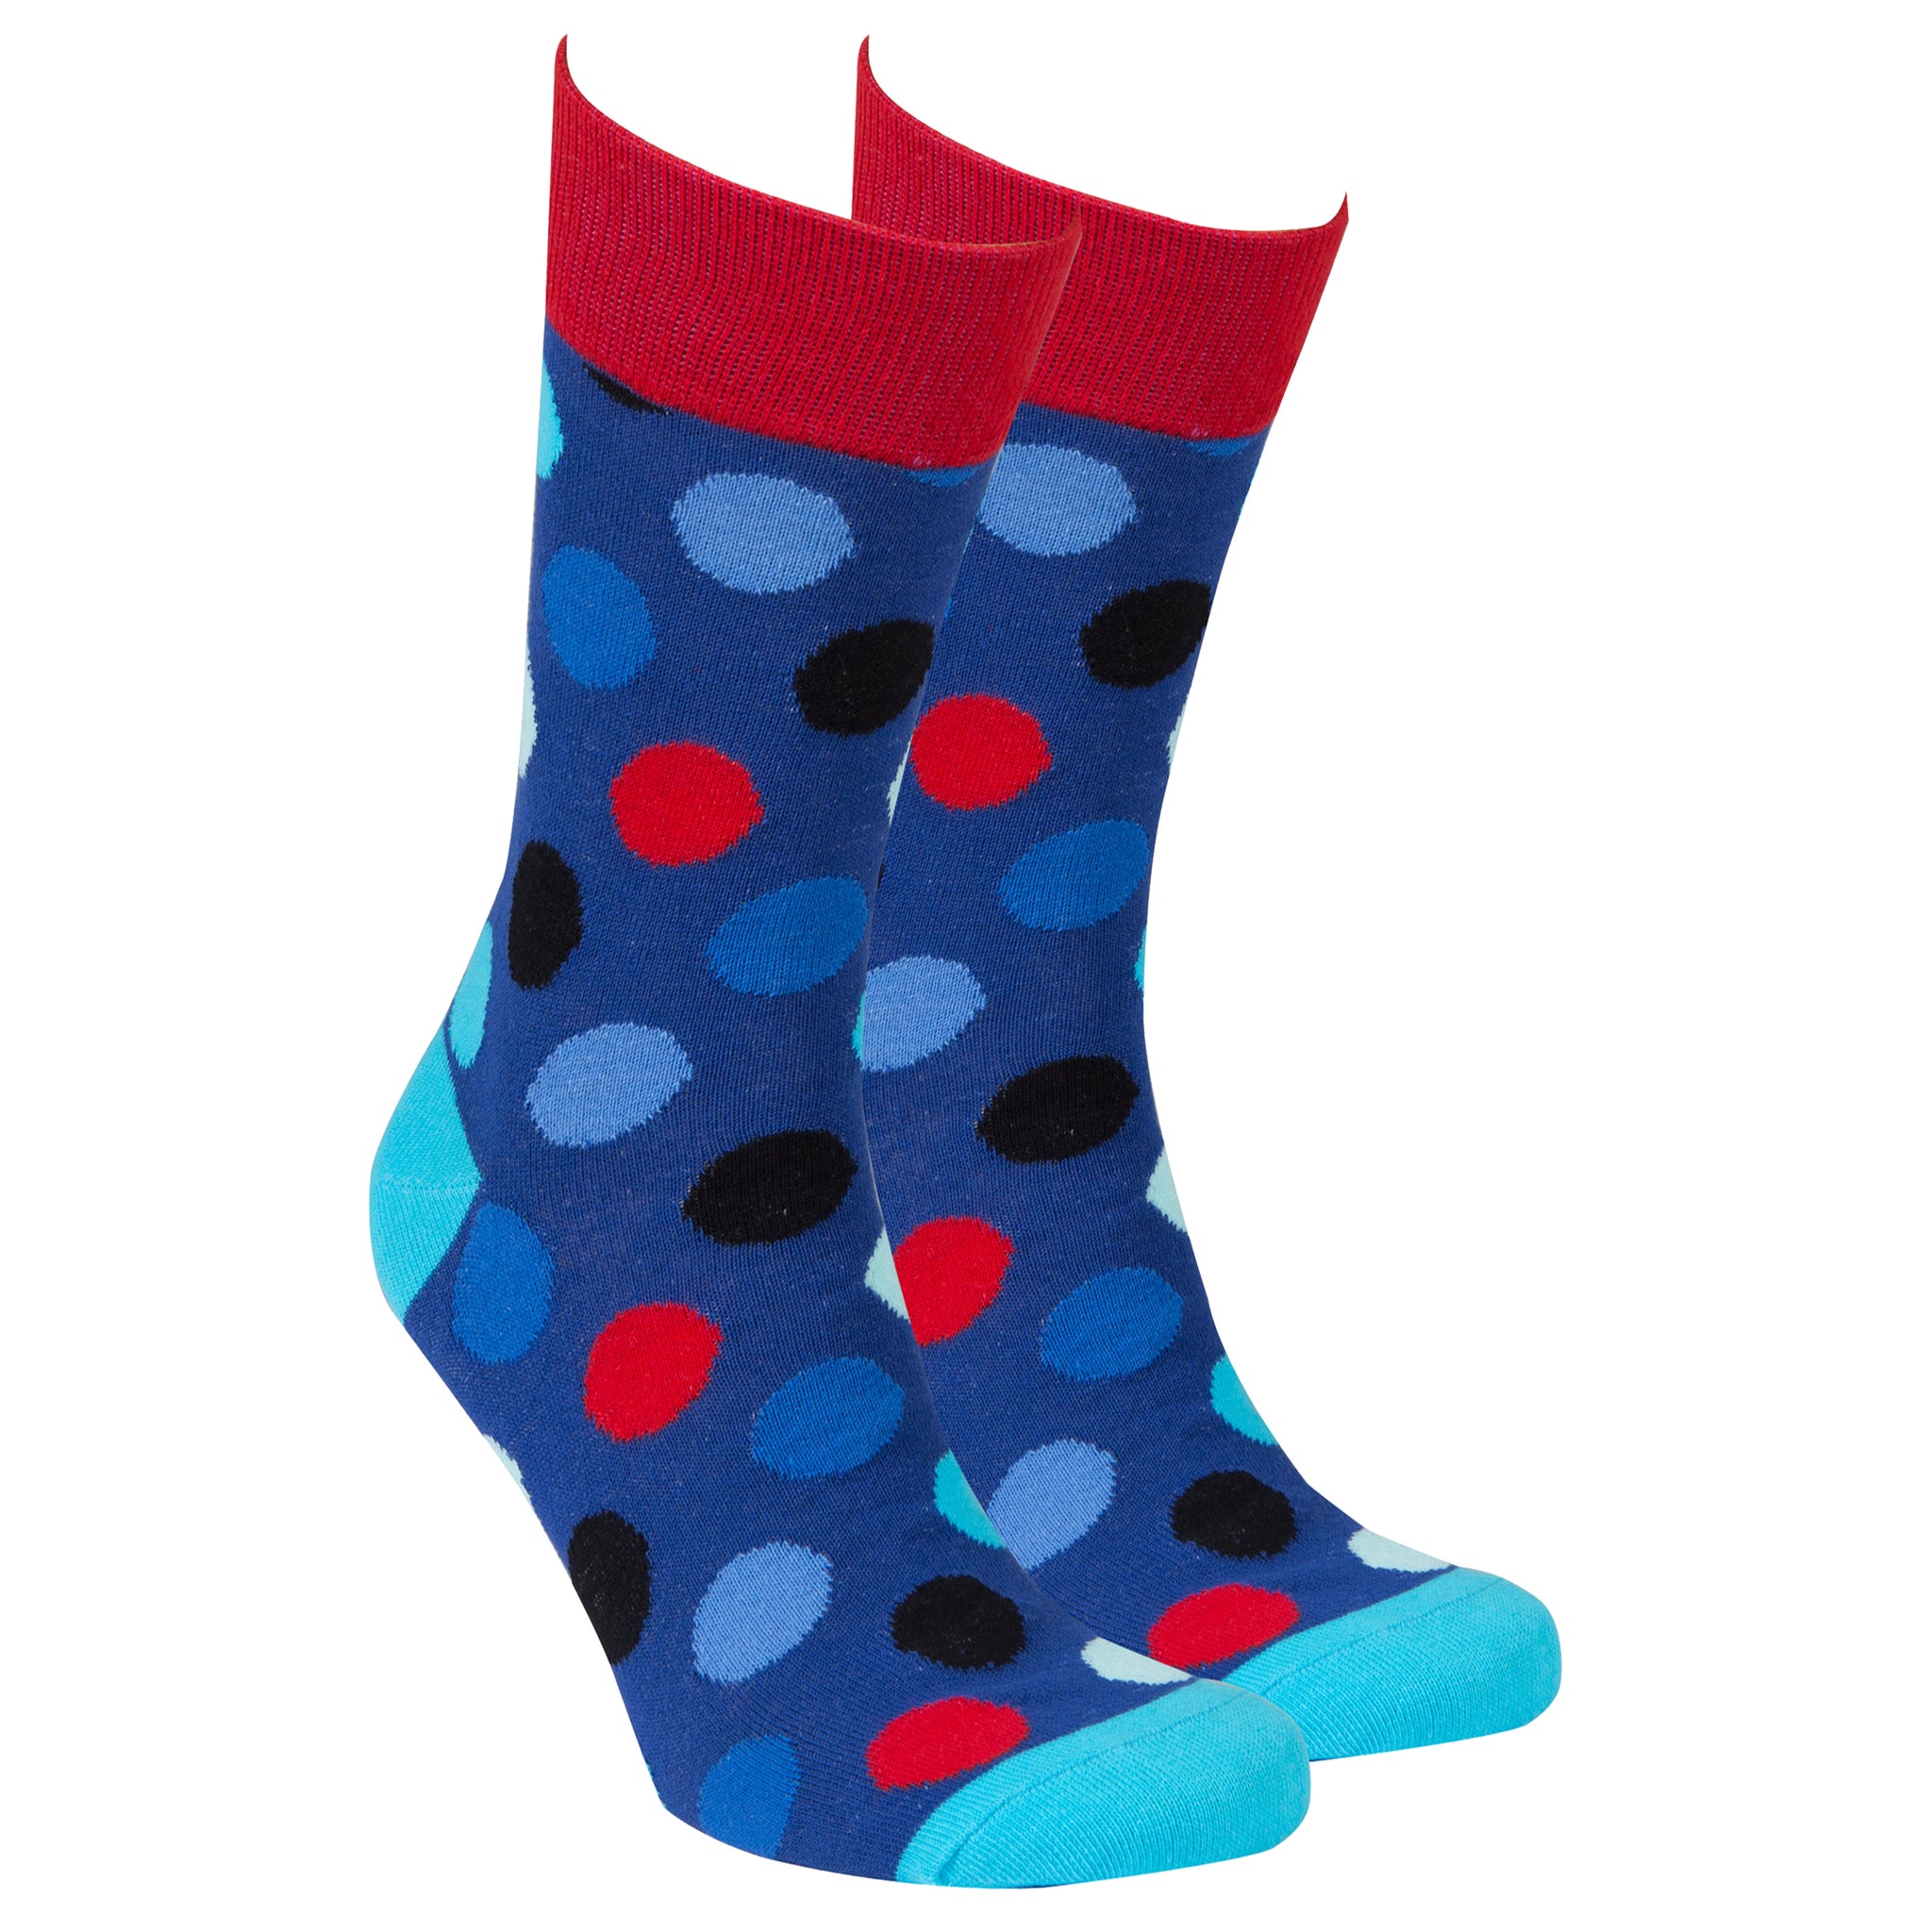 Men's Big Red Dots Socks